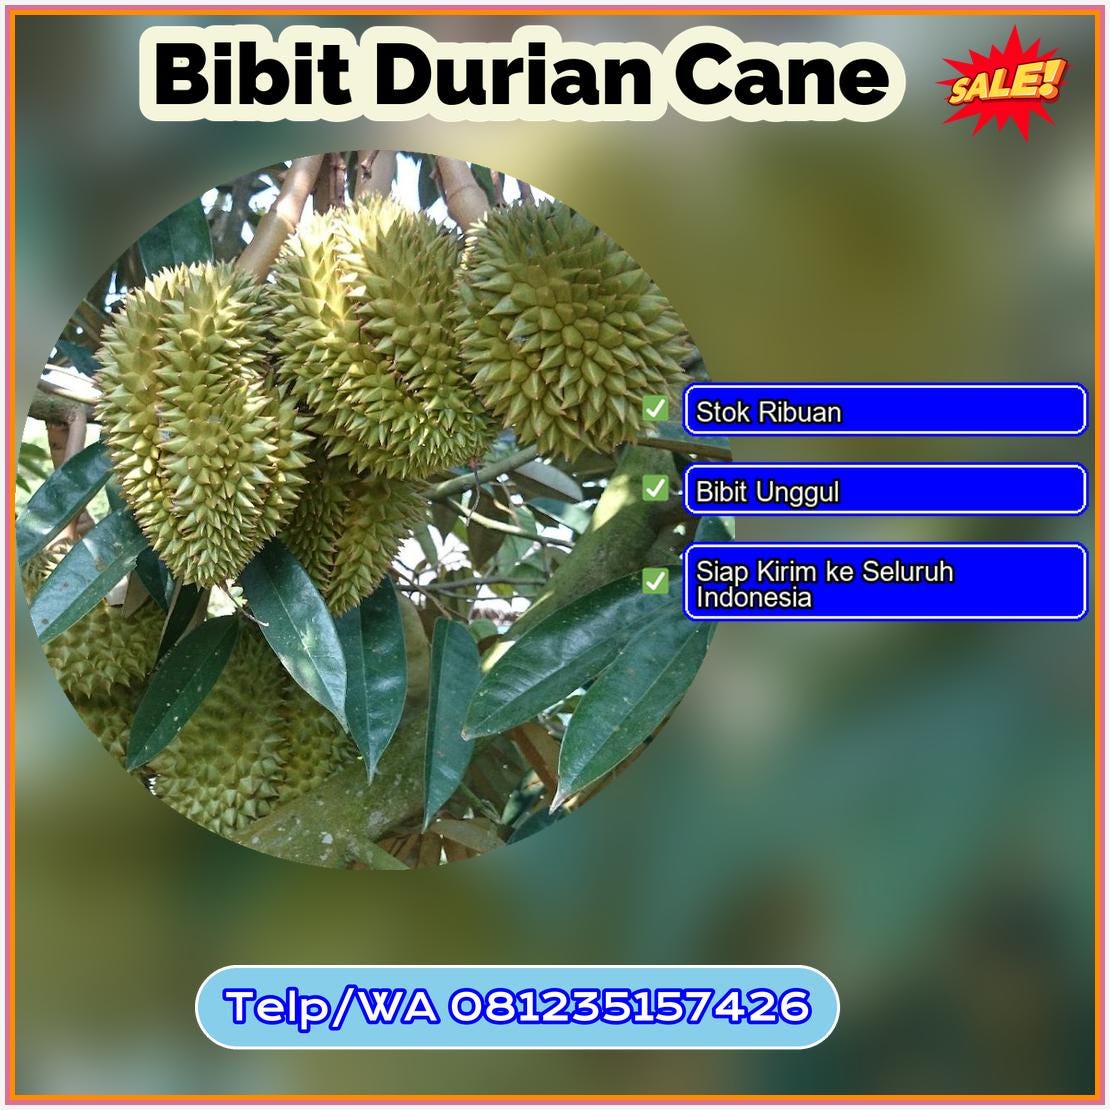 Grosir Bibit Durian Cane Boalemo